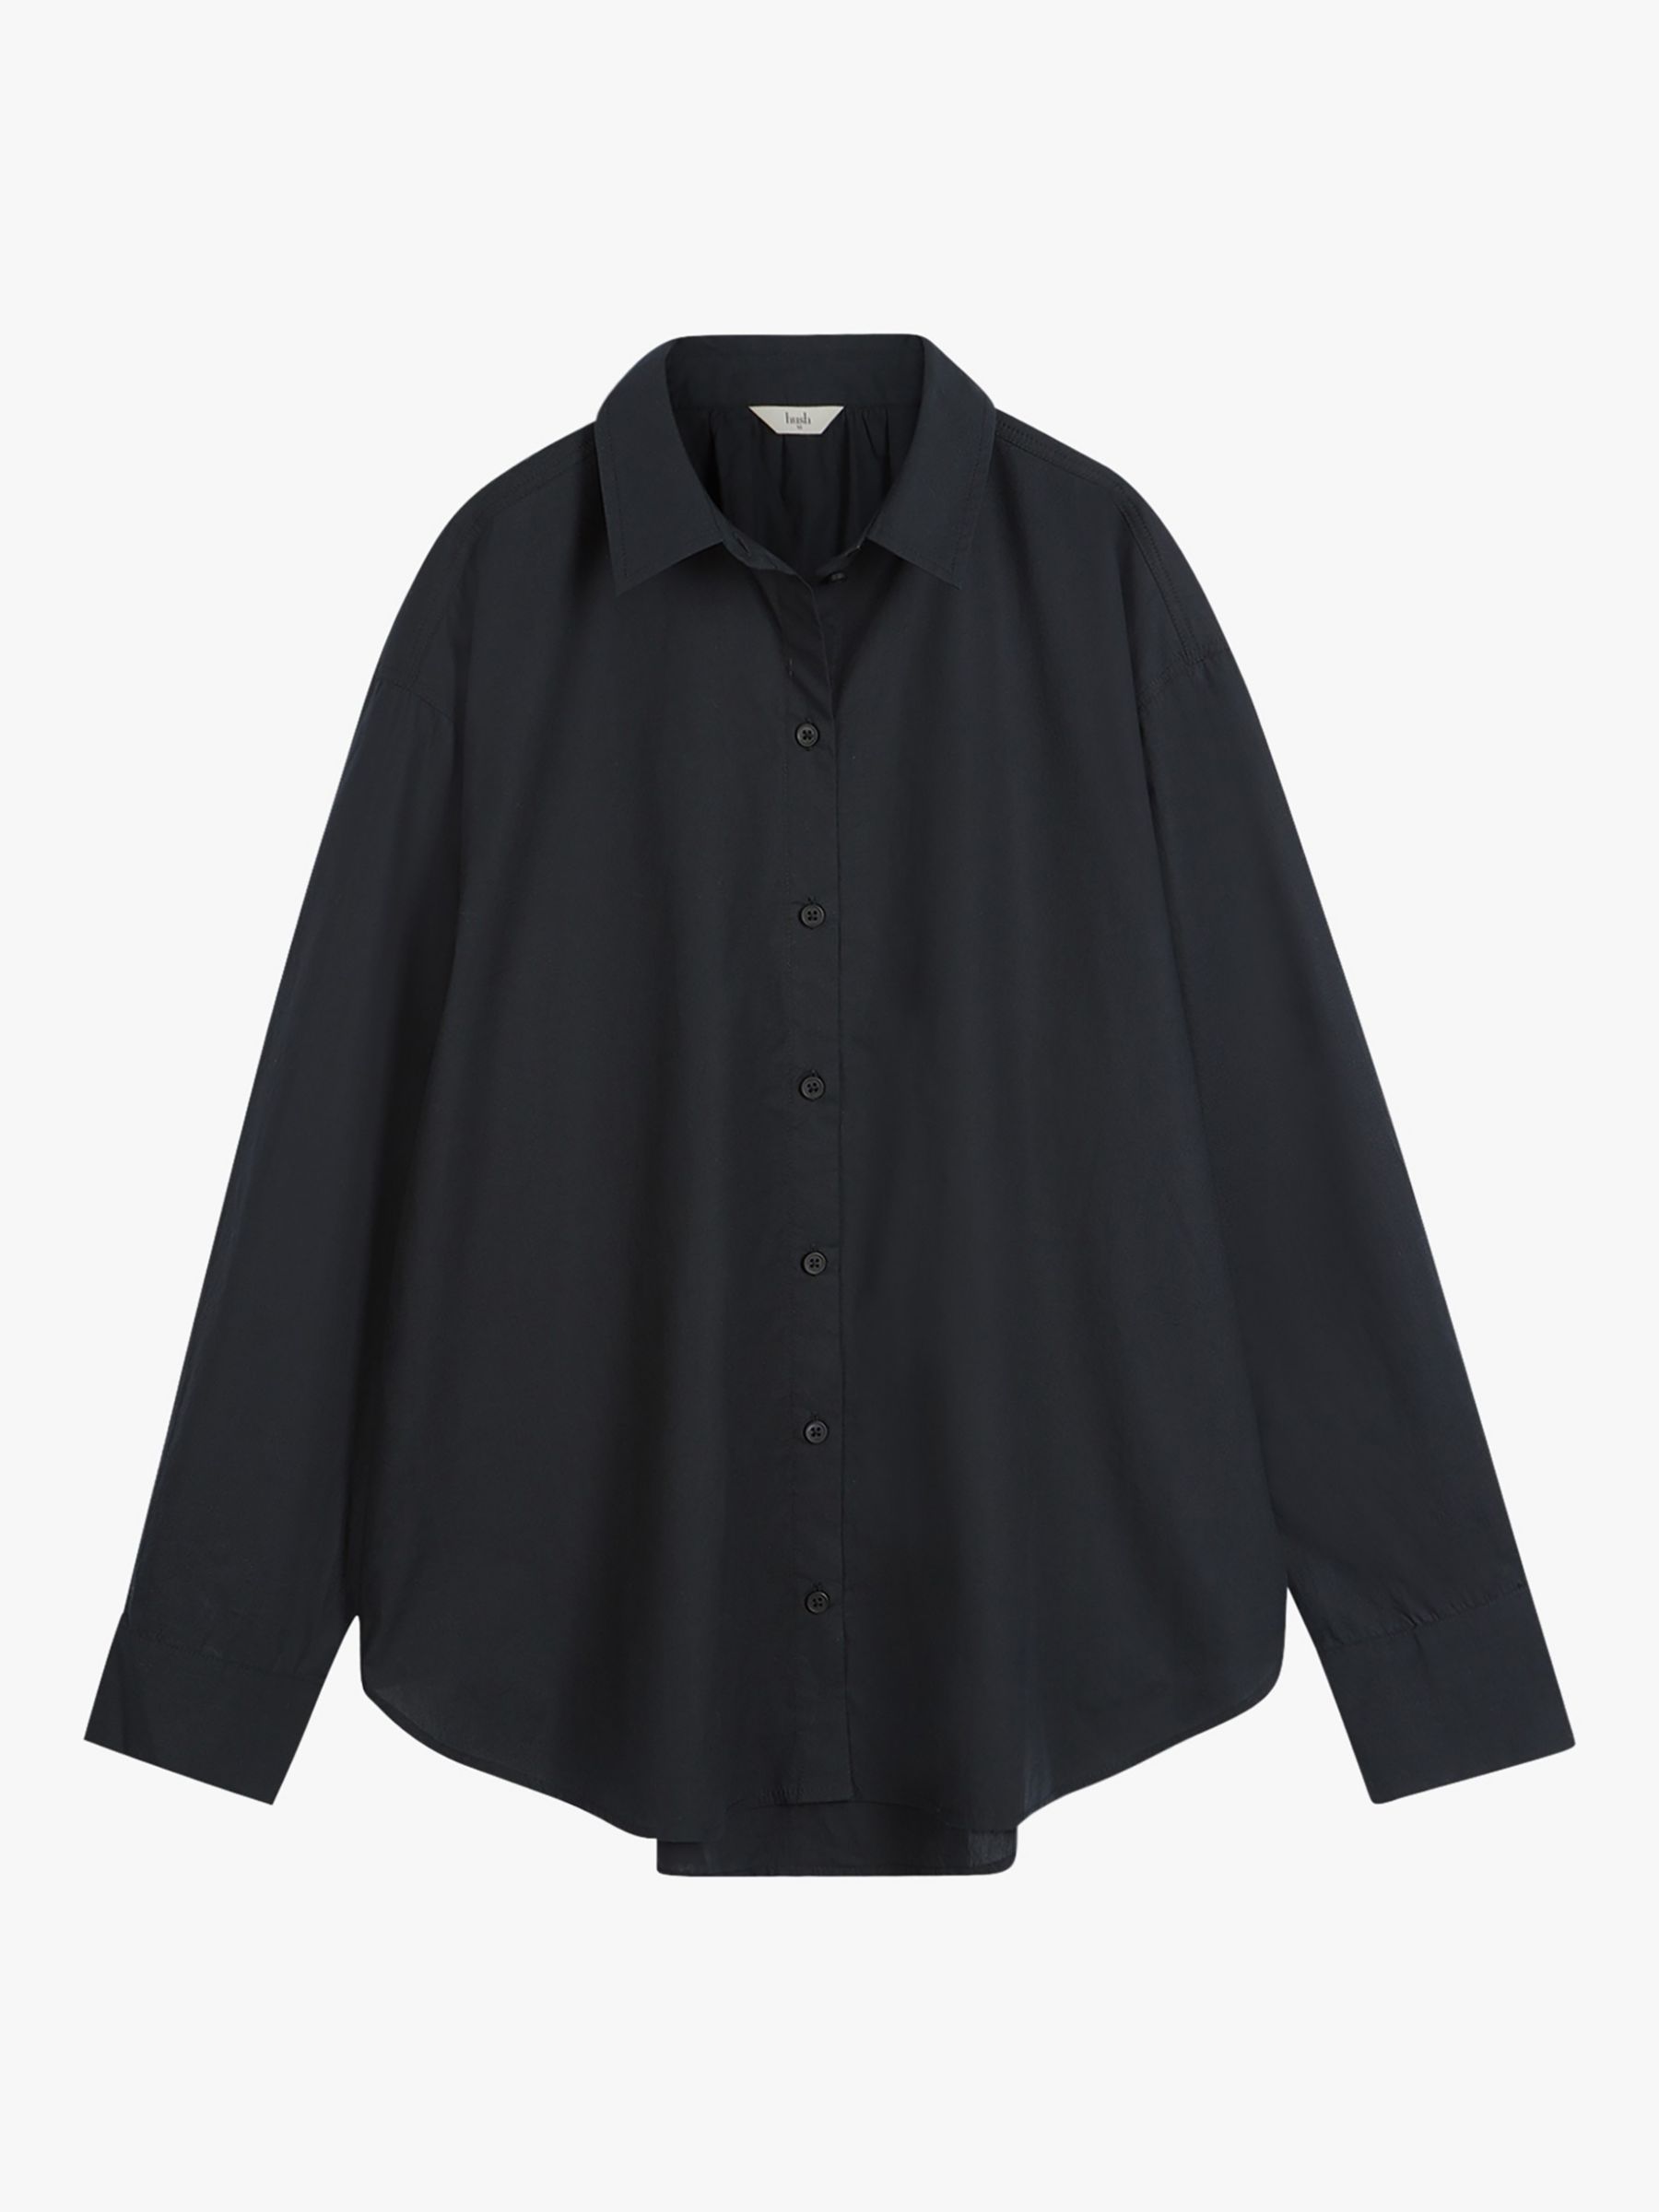 HUSH Pia Oversize Cotton Shirt, Black at John Lewis & Partners